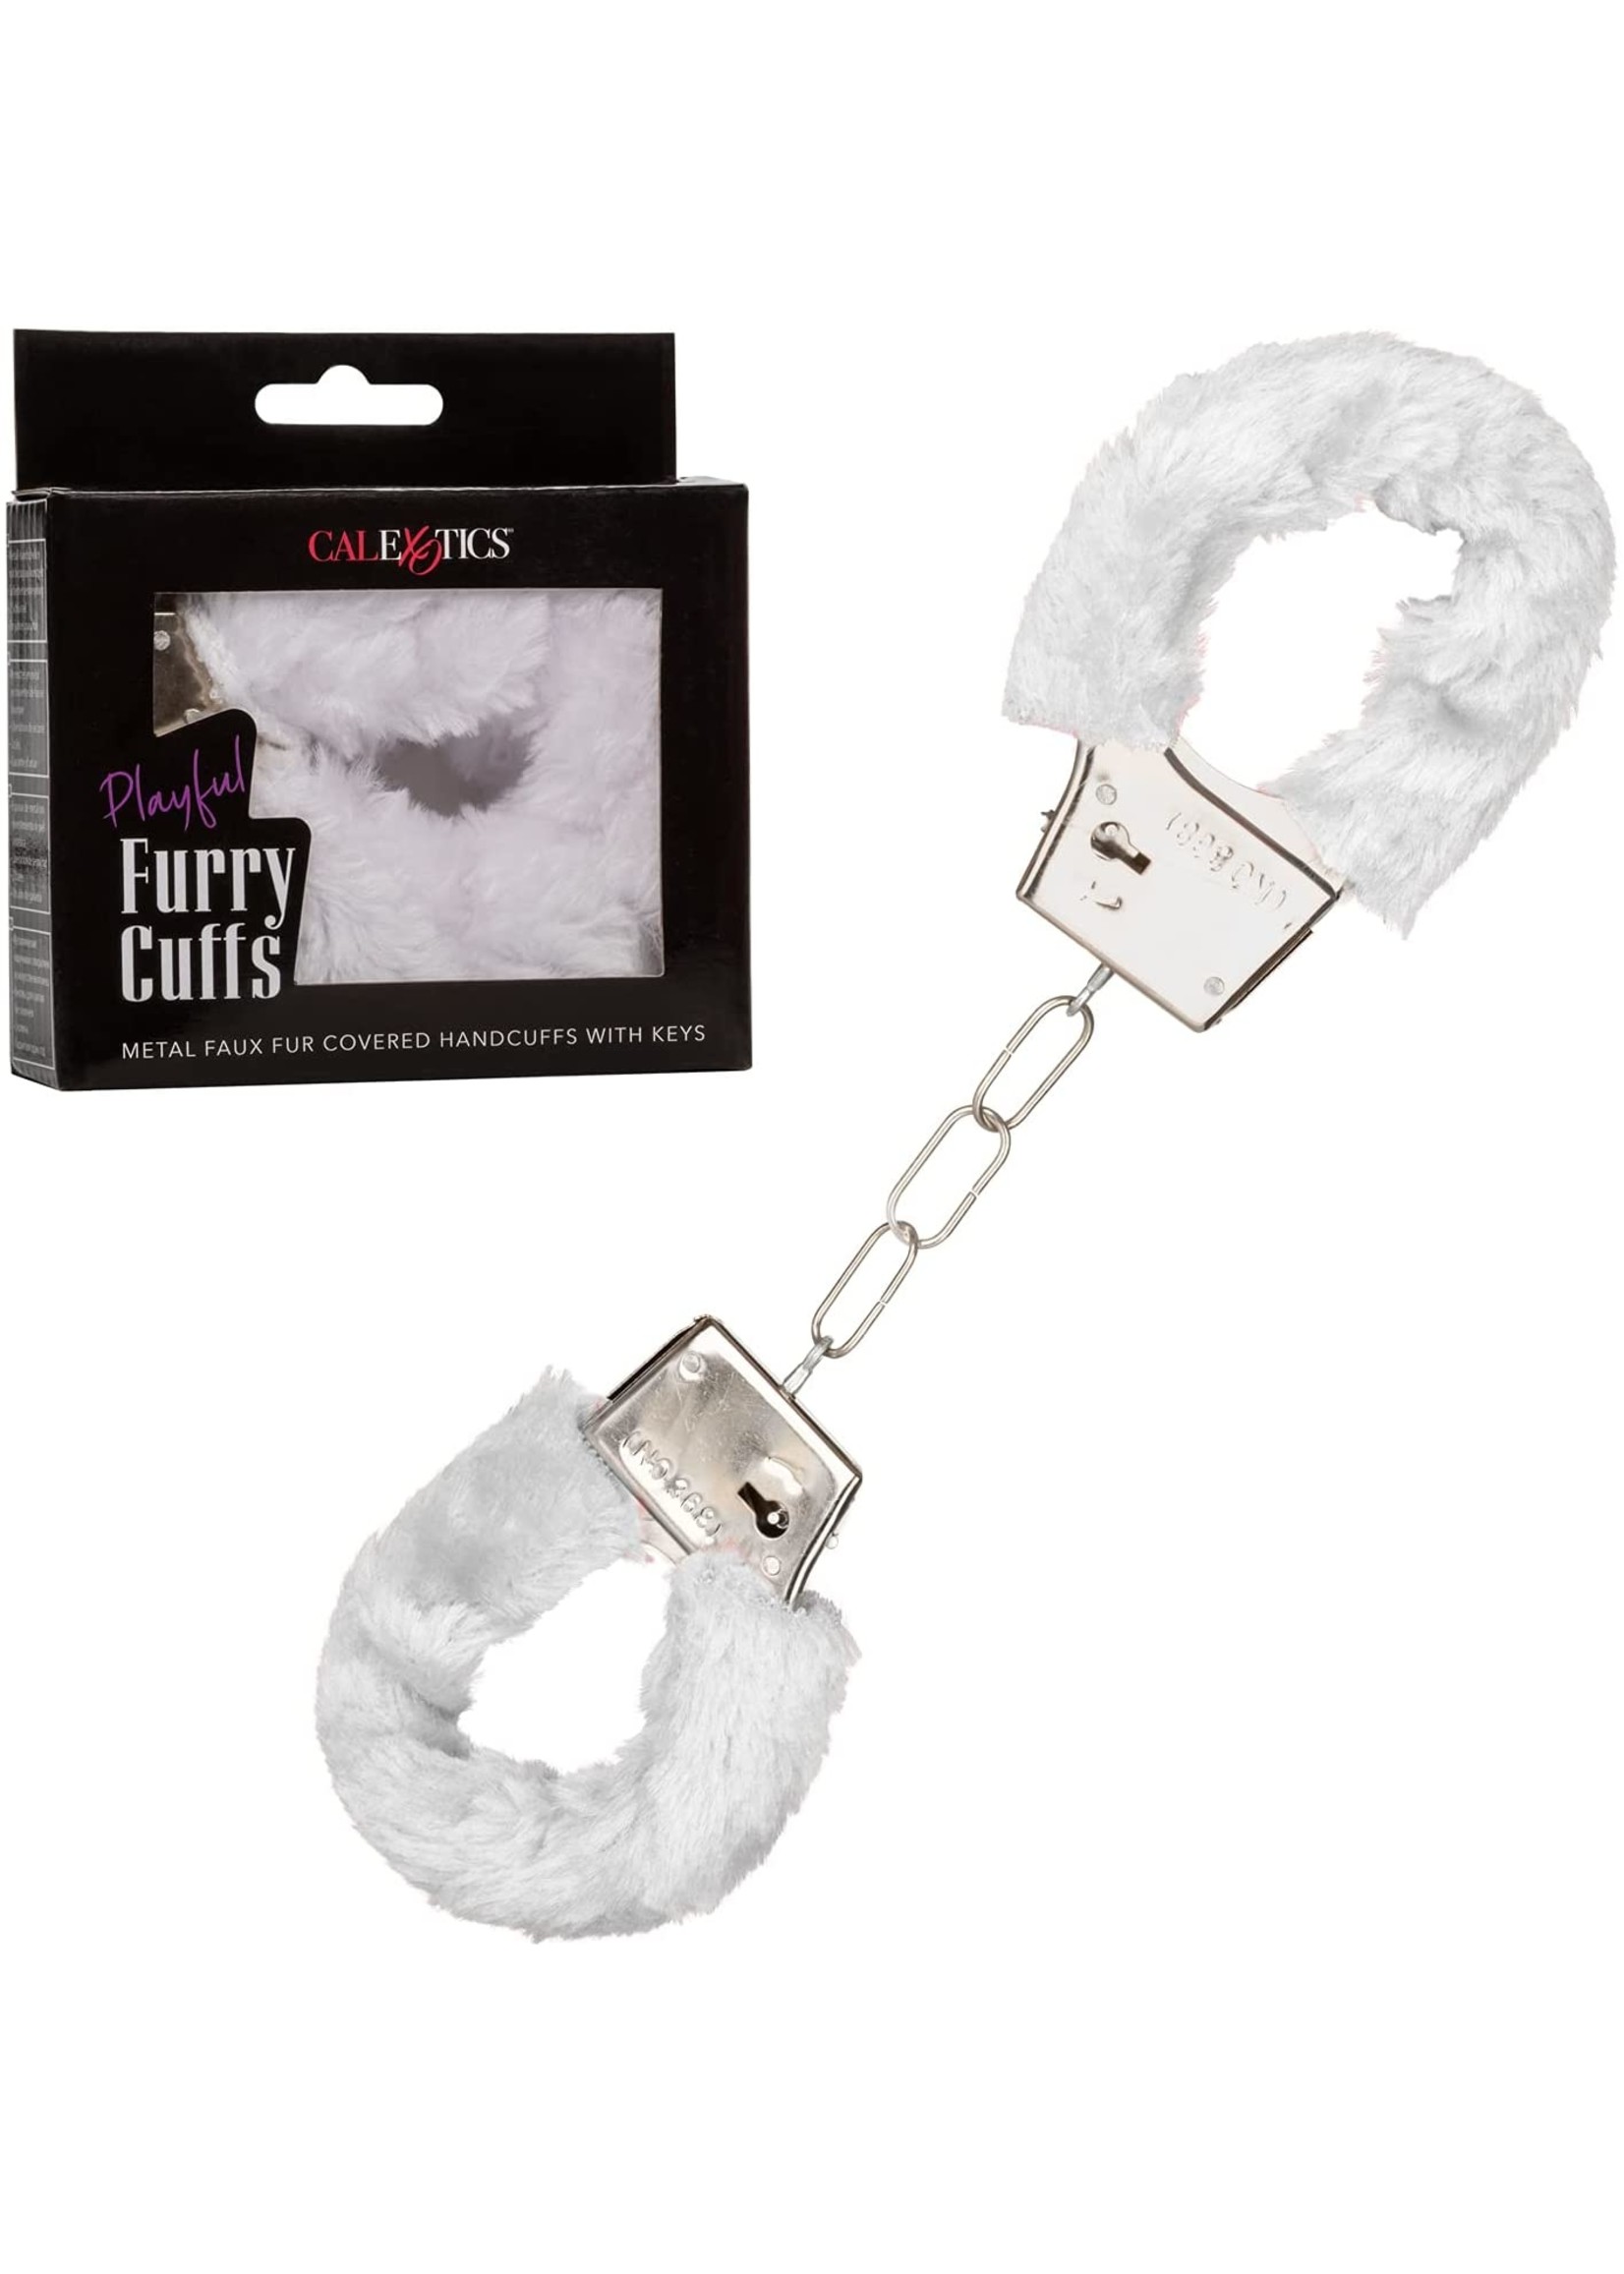 Playful Furry Cuffs in White